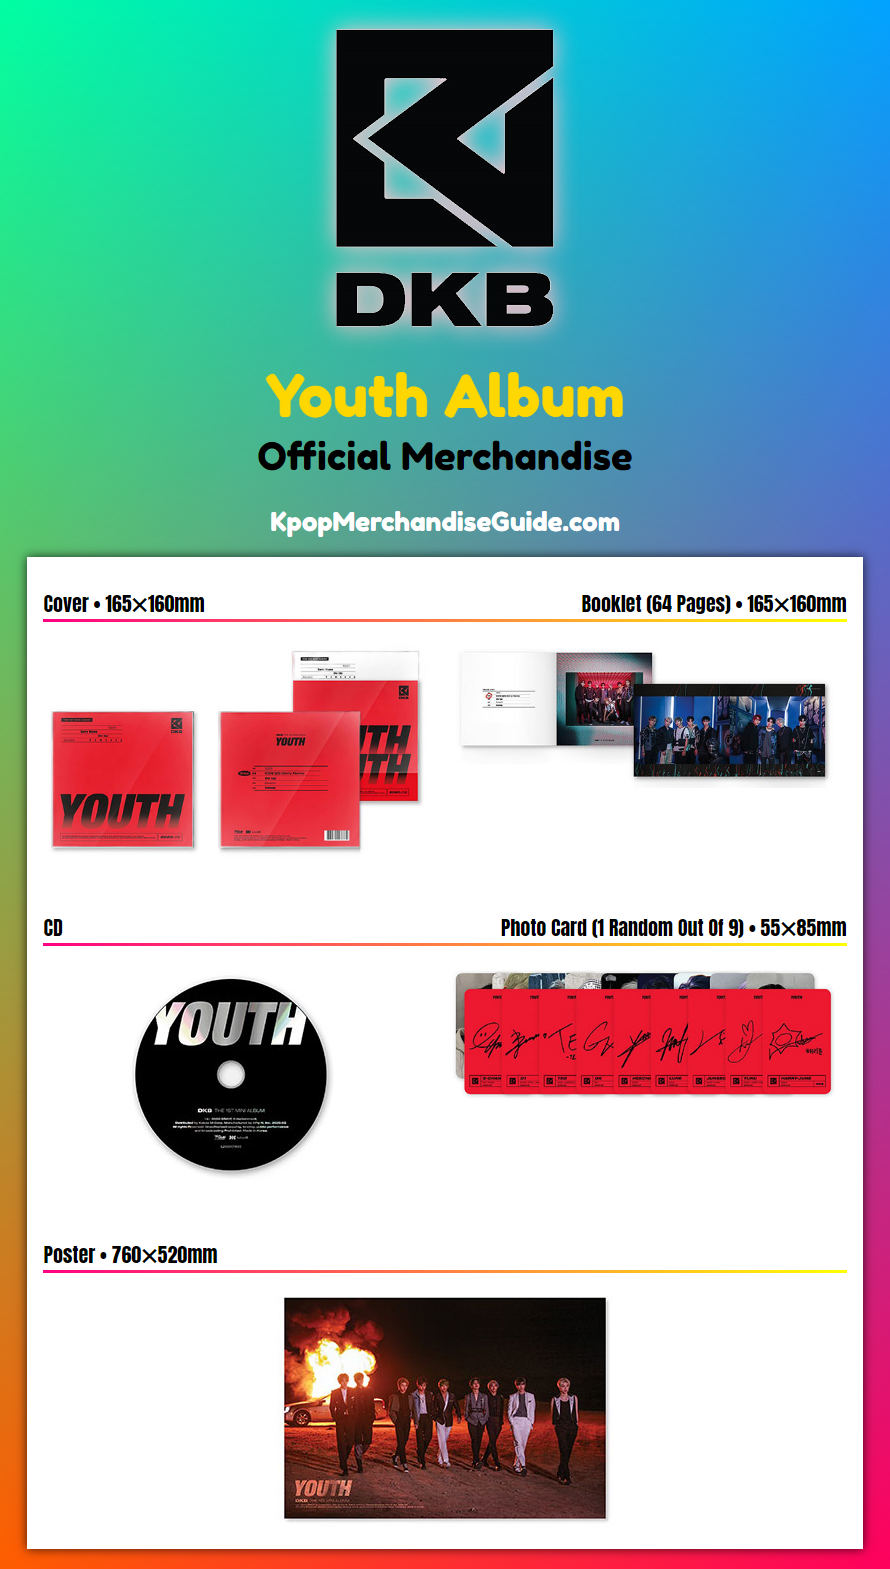 DKB Youth Album Merchandise